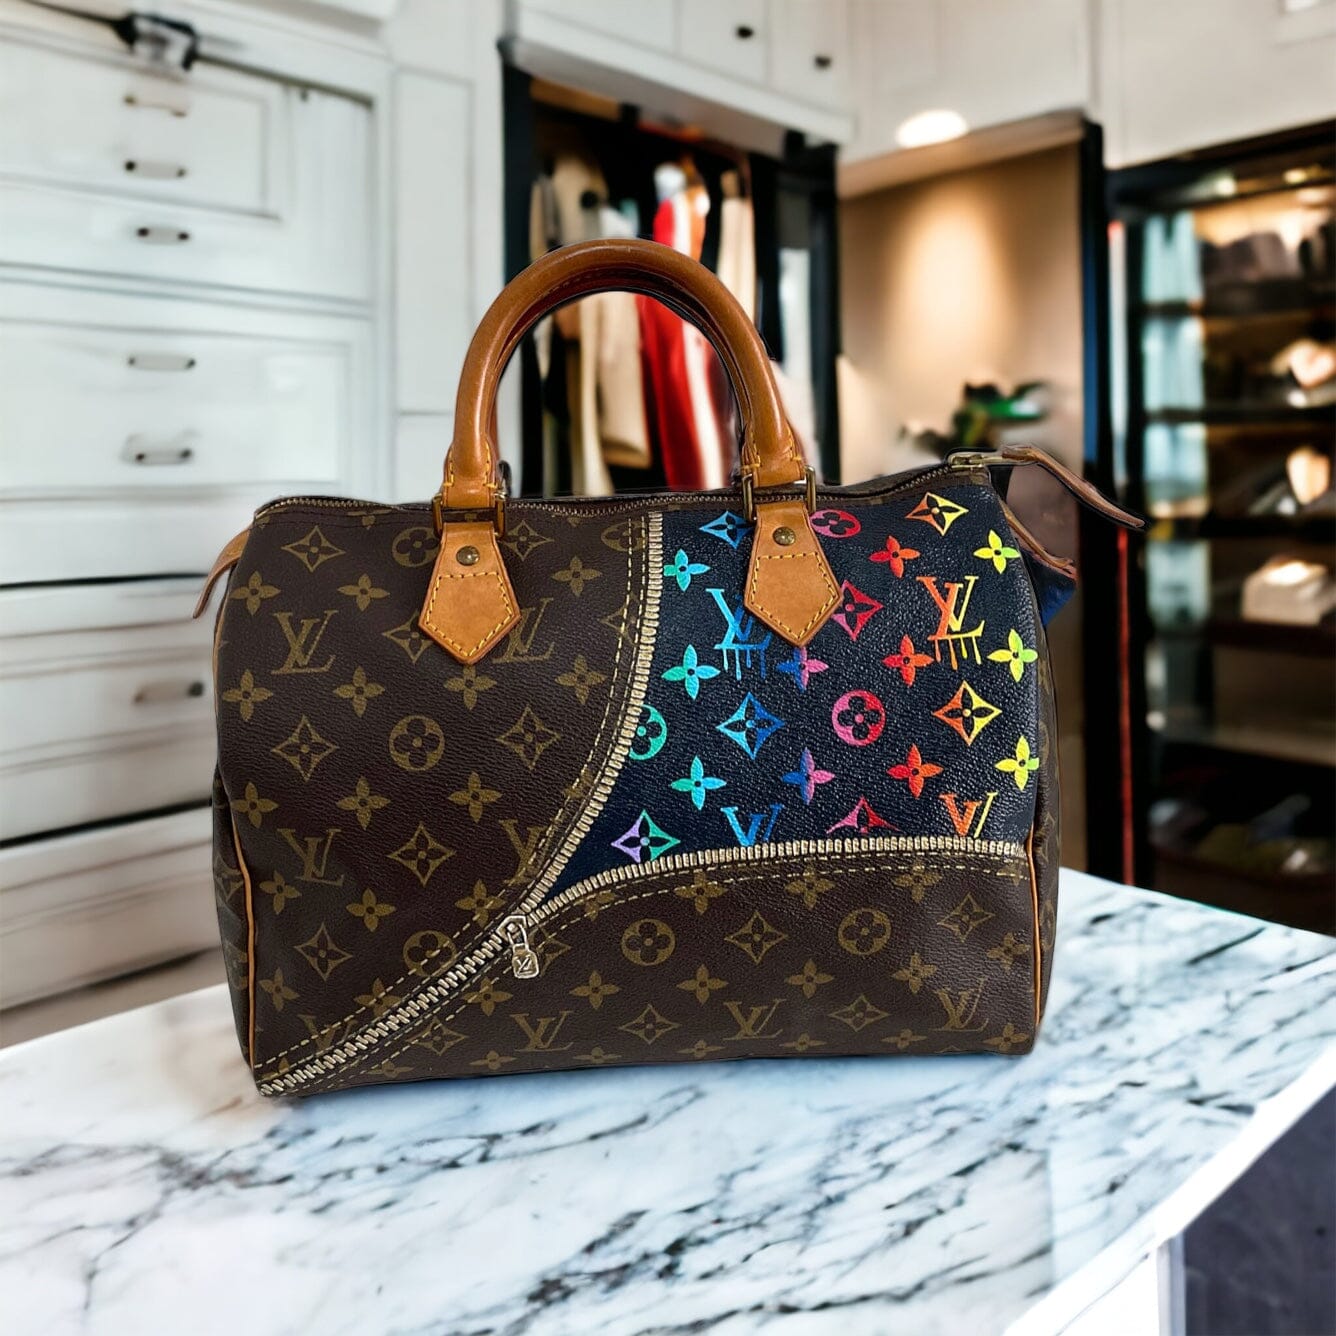 Buy Louis Vuitton Speedy 30 Louis Vuitton 12 Duffel Bag Online in